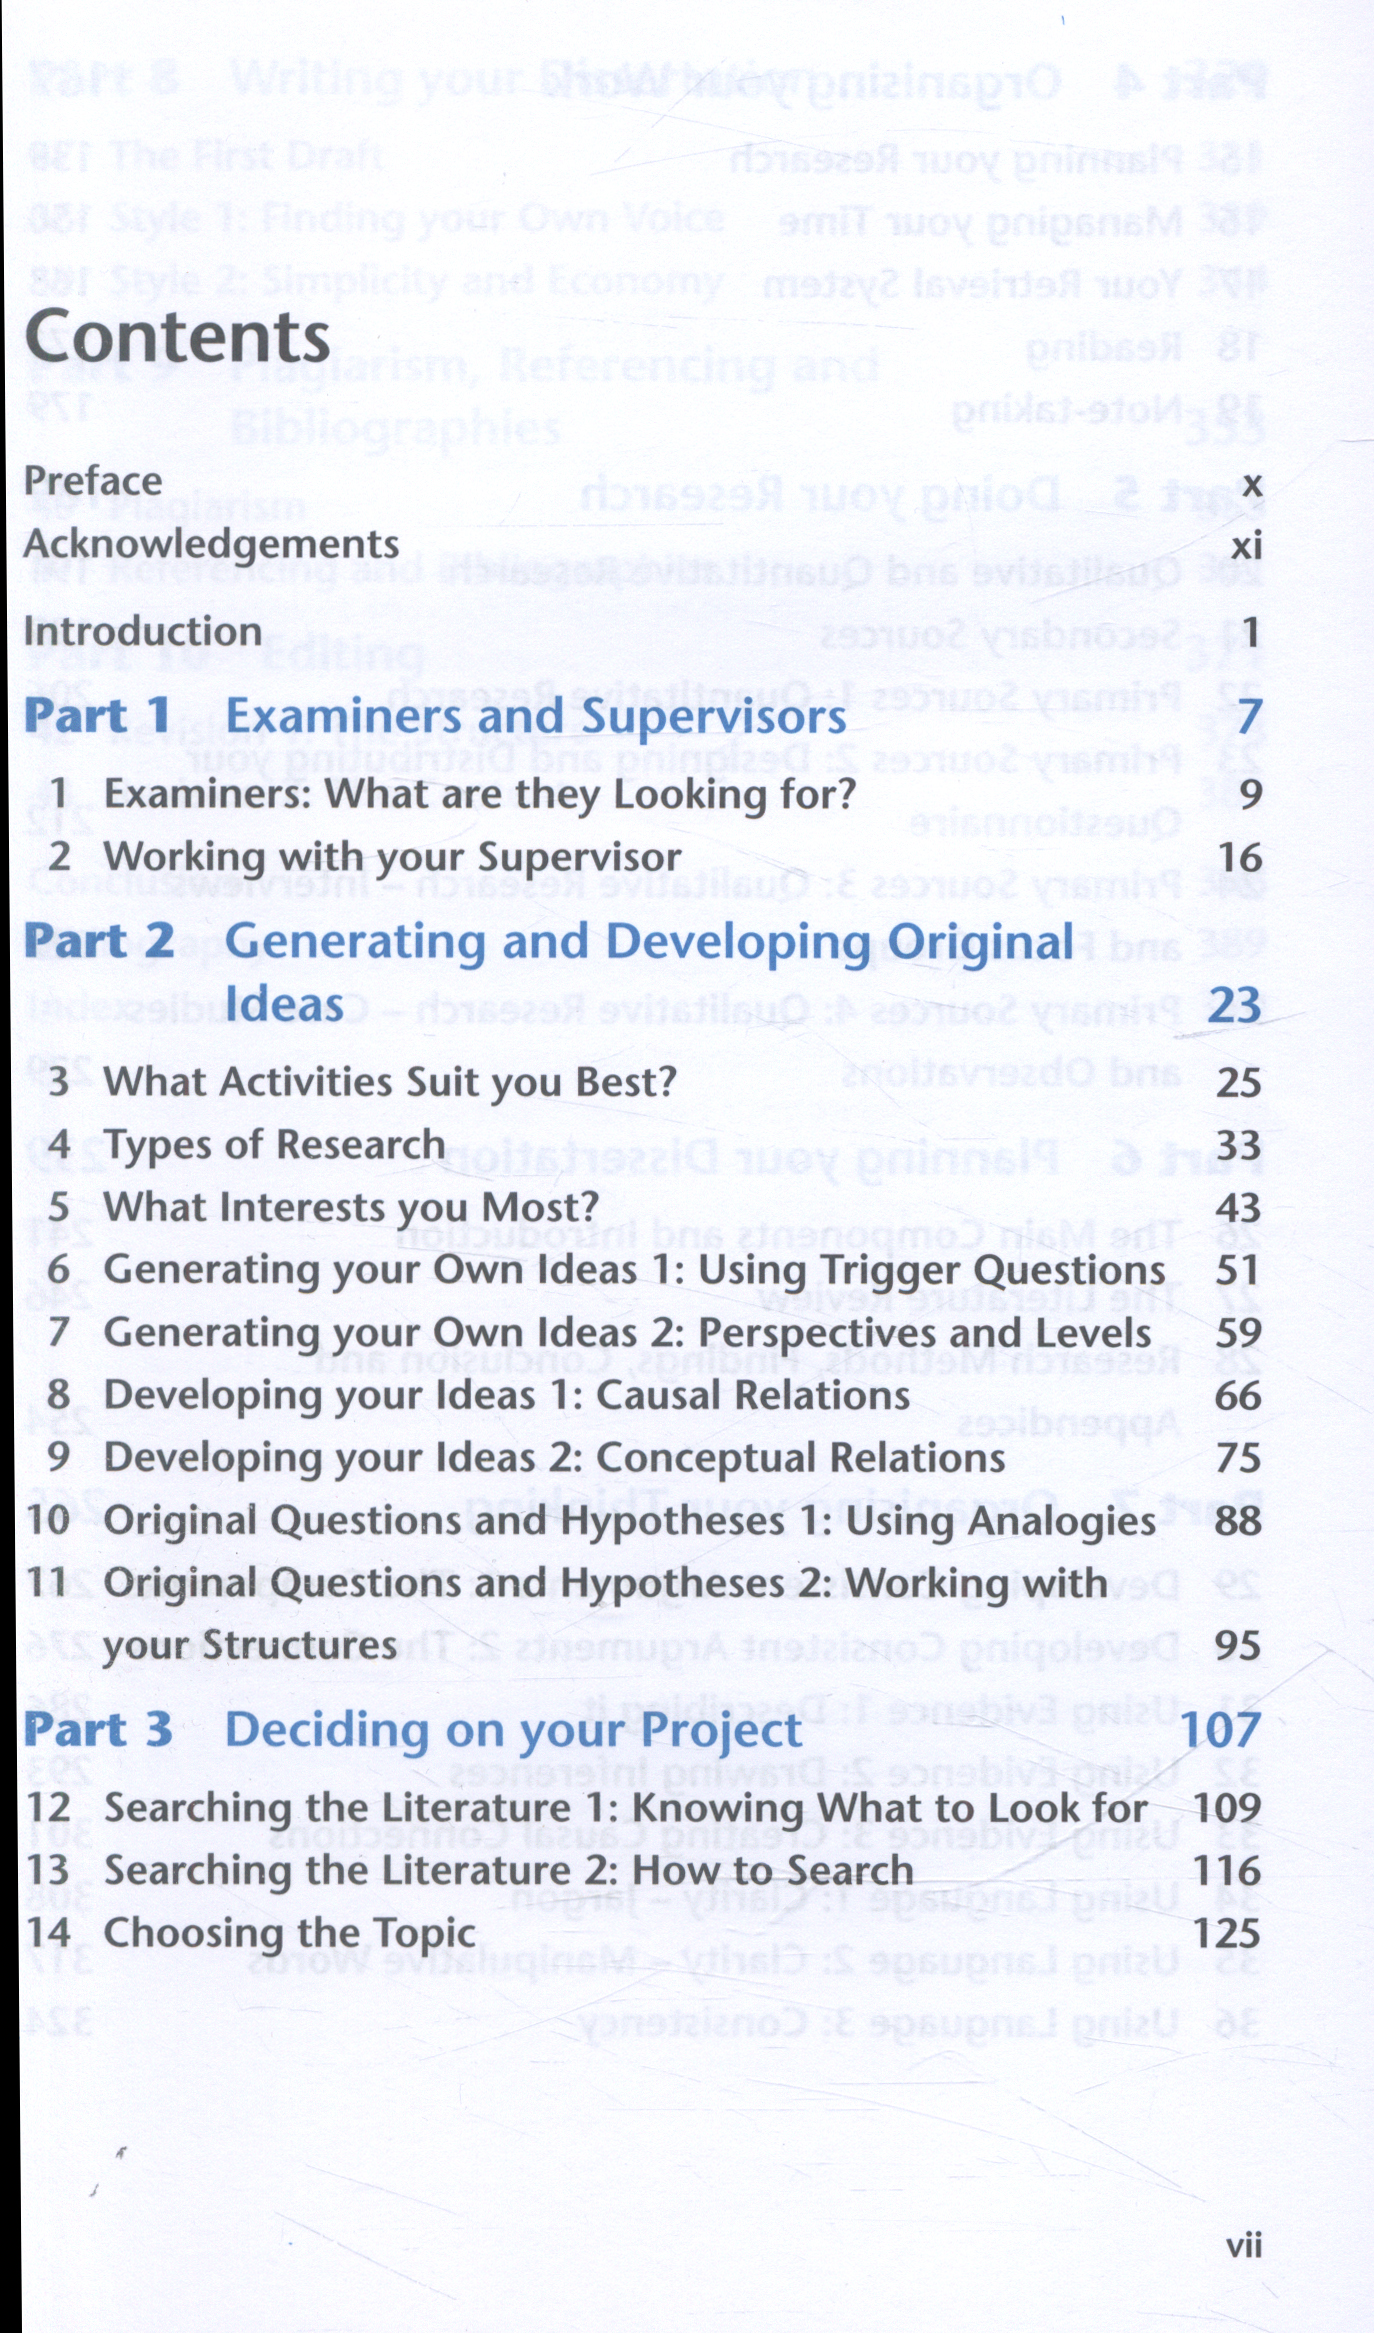 Greetham b (2009) how to write your undergraduate dissertation